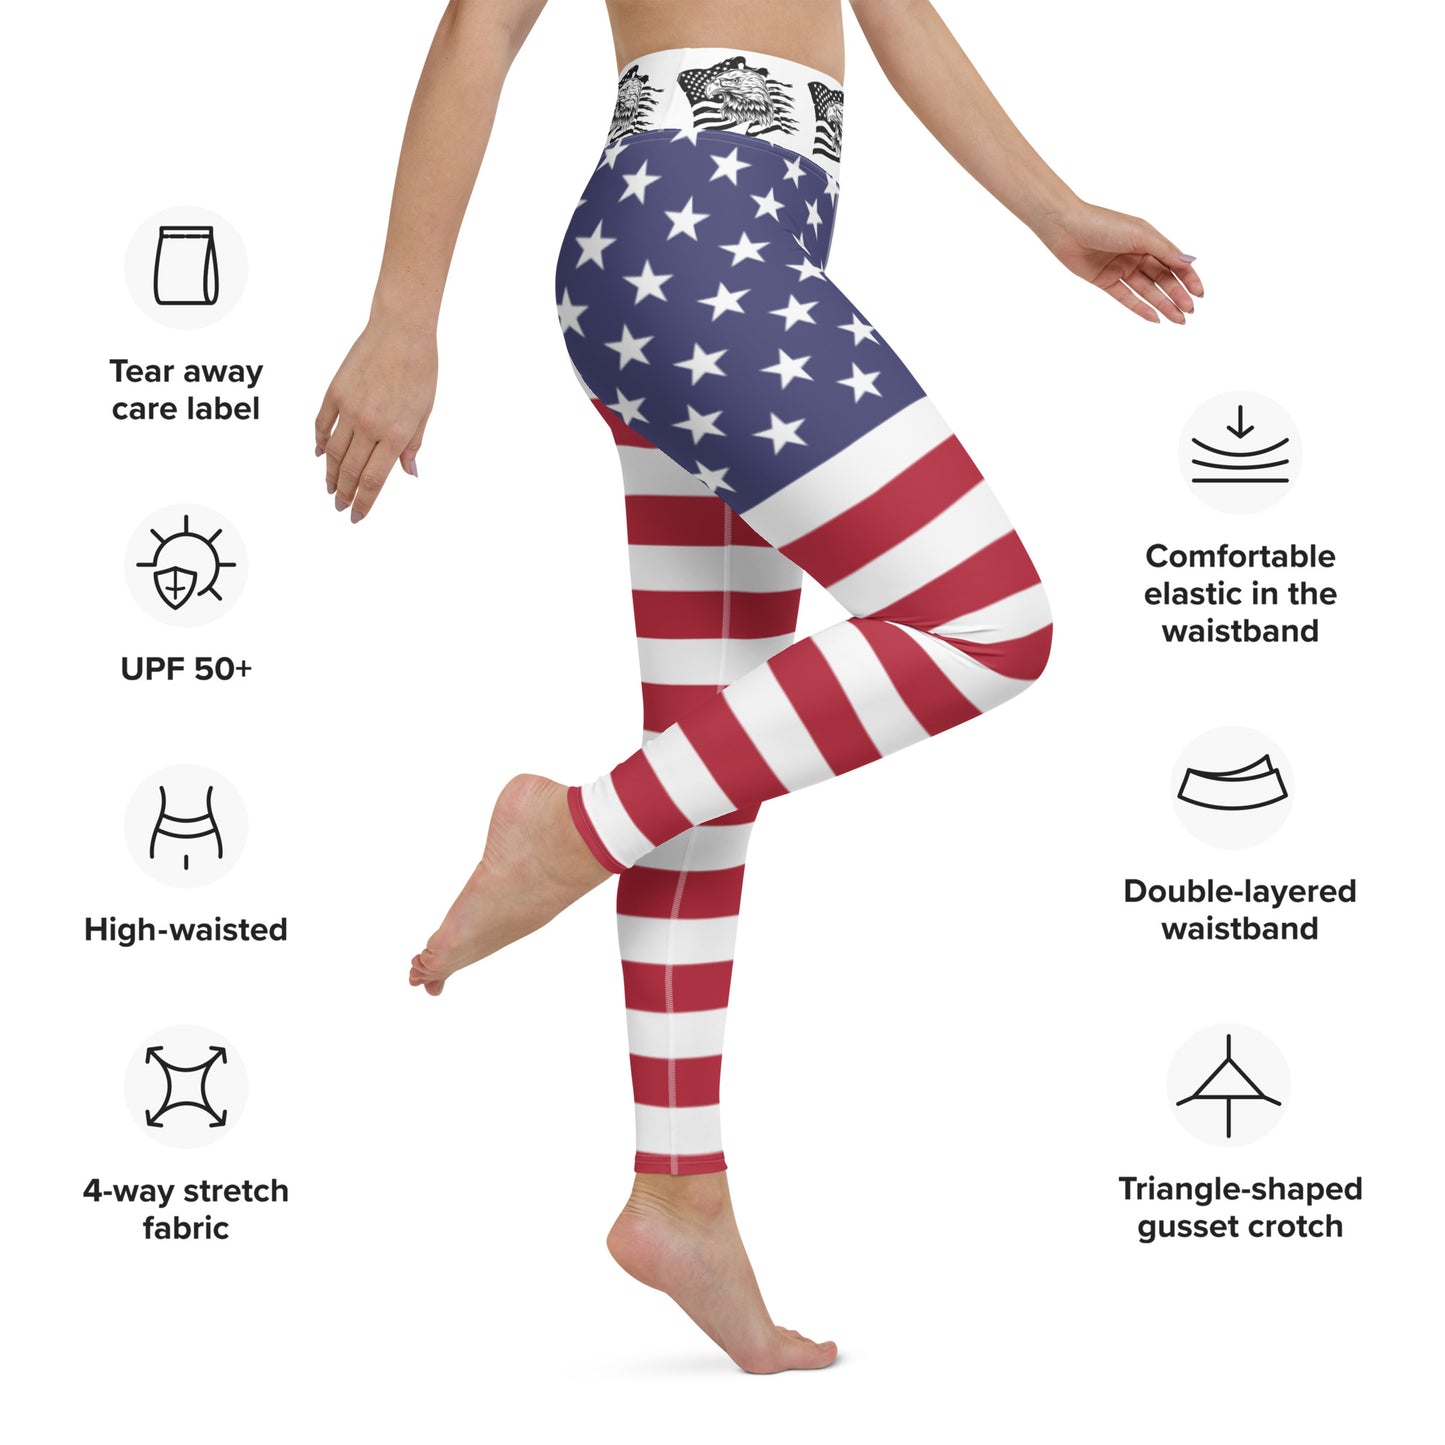 United States Of America Flag Yoga Leggings / Stars And Stripes Clothing / Inside Pocket